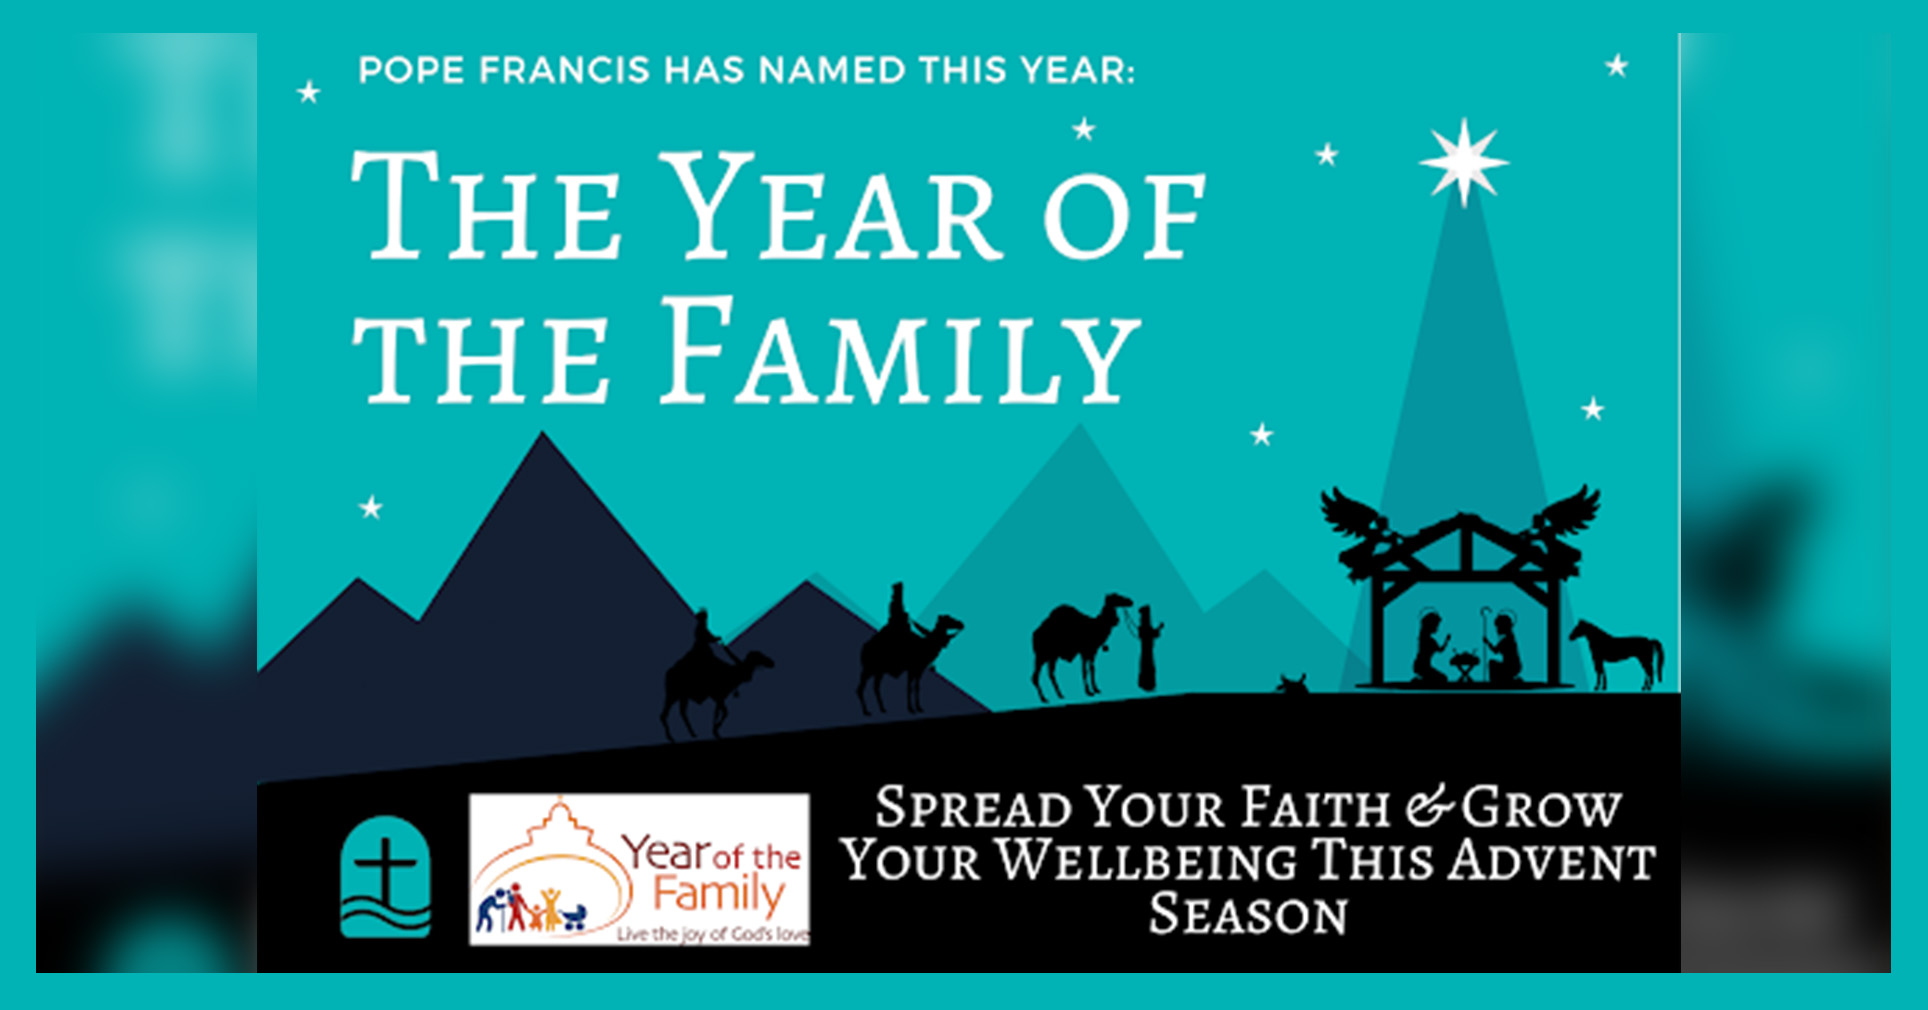 Spread Your Faith and Help Grow Wellbeing This Advent Season!